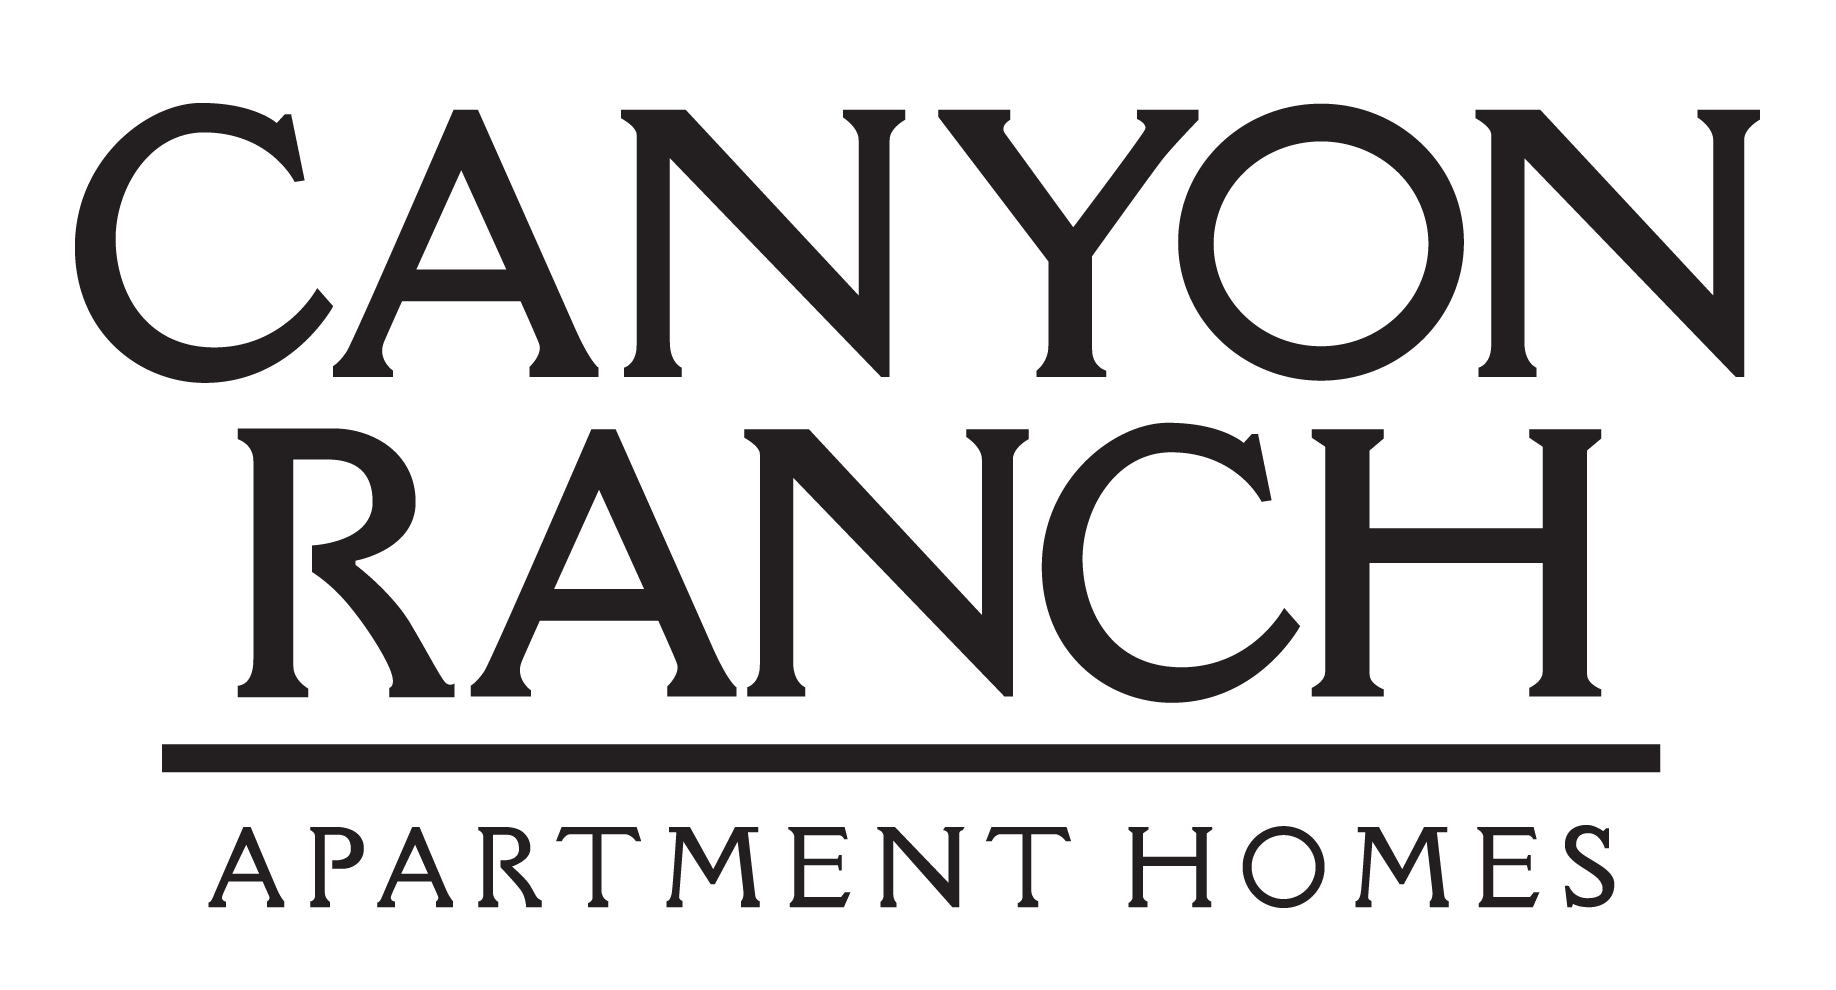 Company logo of Canyon Ranch Apartments